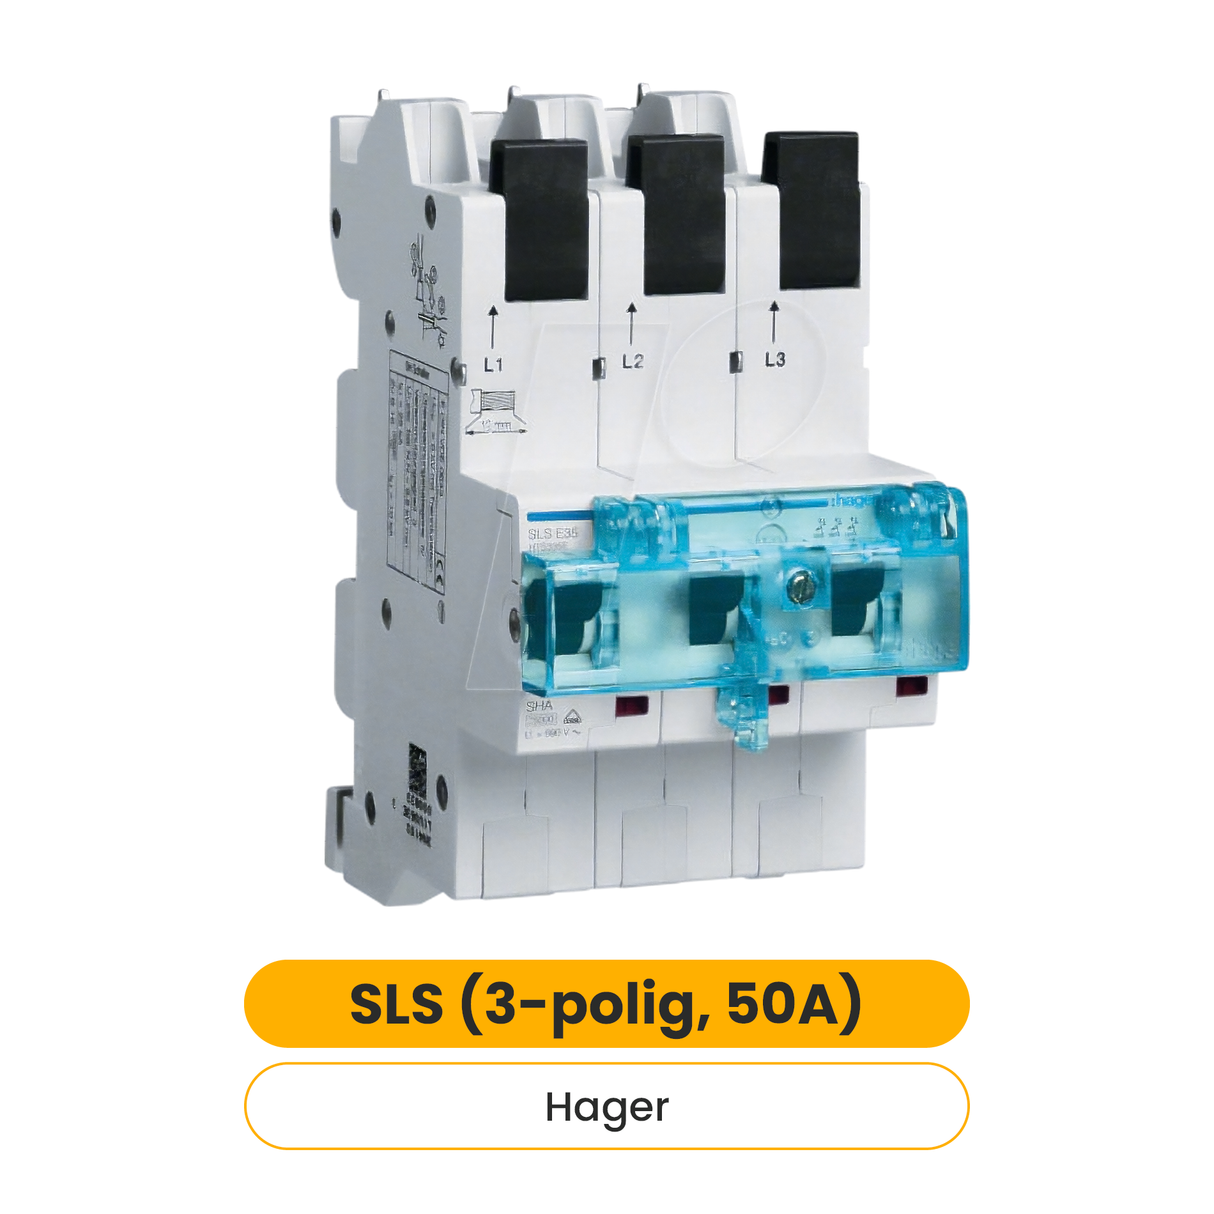 Hager SLS (3-polig, 50A)